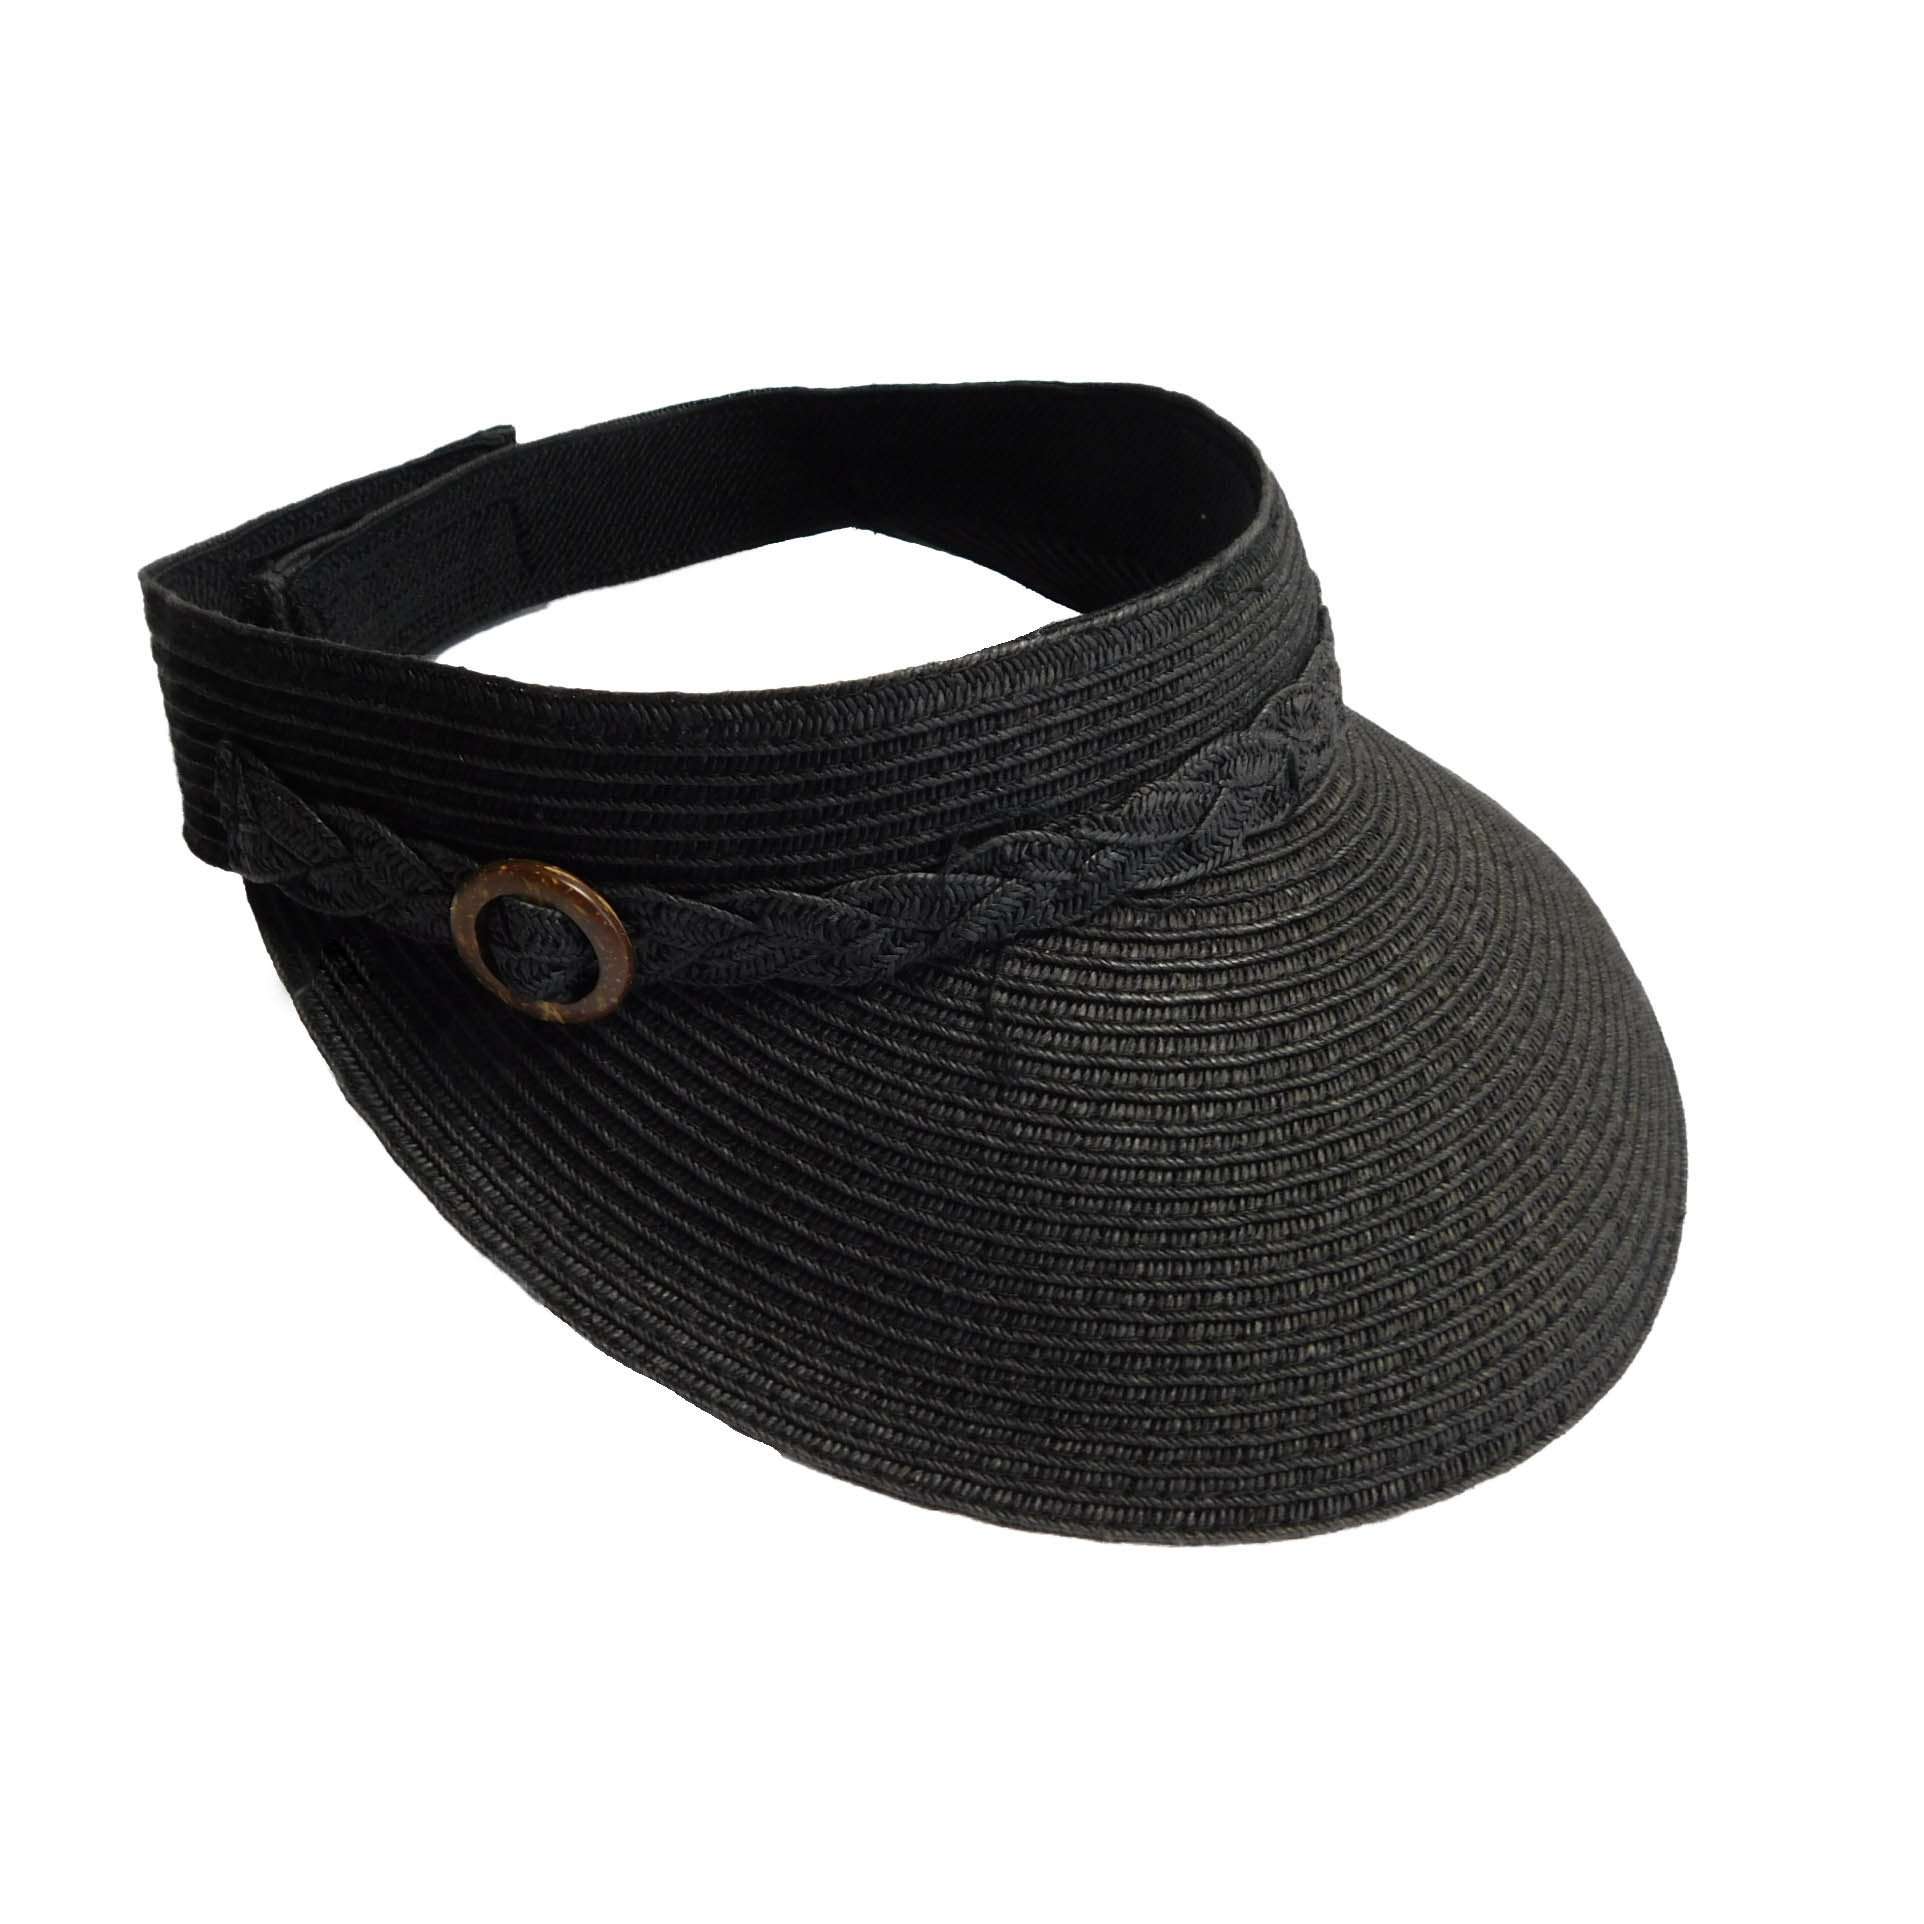 Straw Visor with Buckle Accent Visor Cap Boardwalk Style Hats WSPS656BK Black  